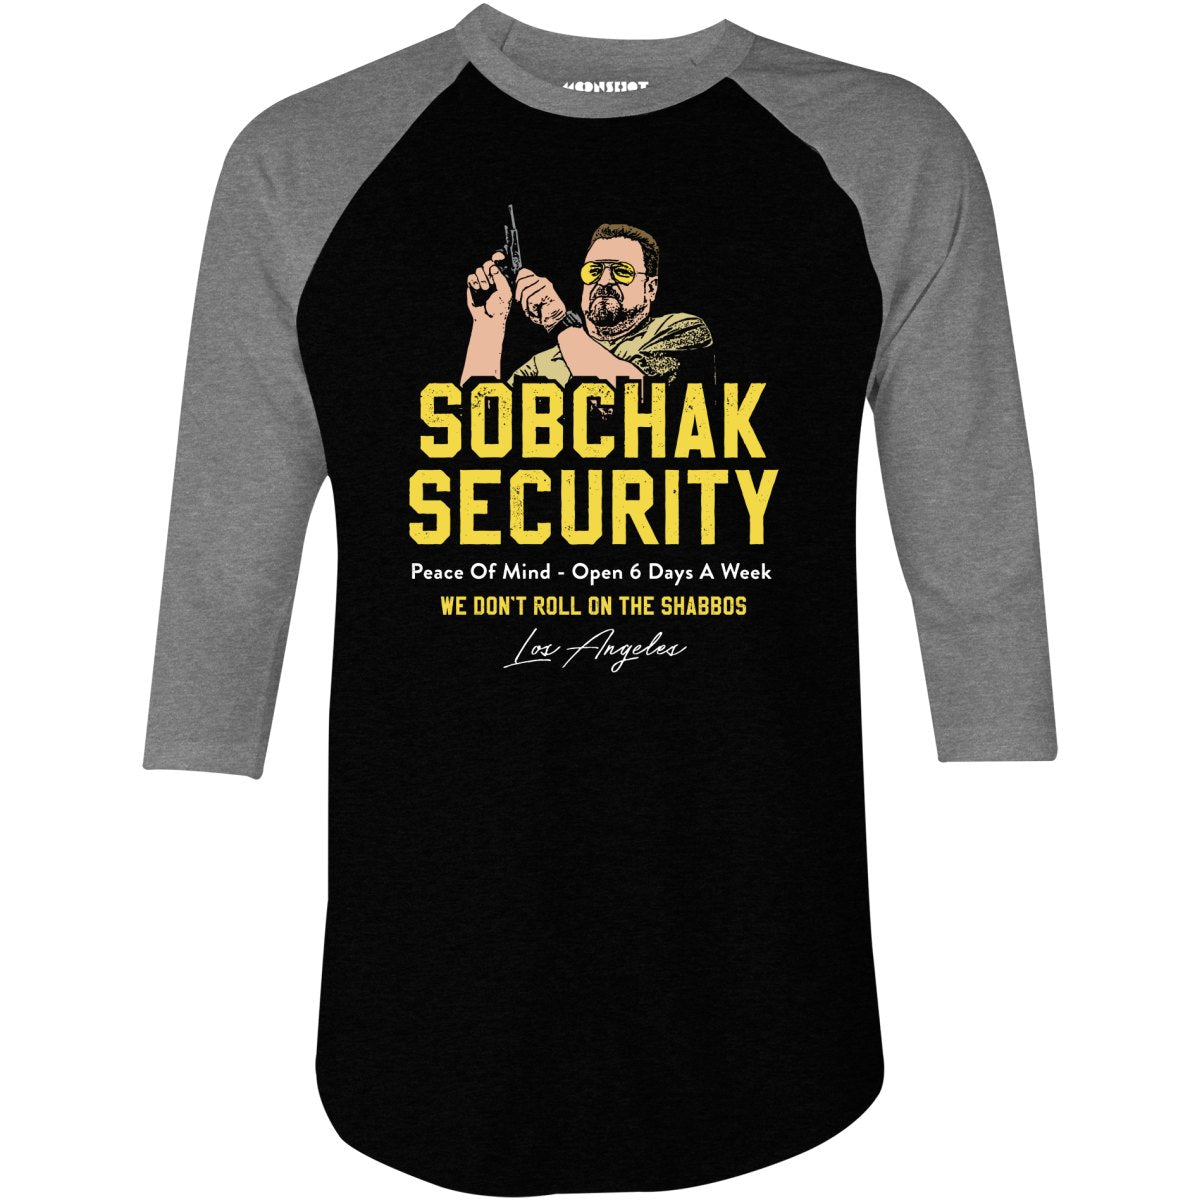 Sobchak Security - 3/4 Sleeve Raglan T-Shirt